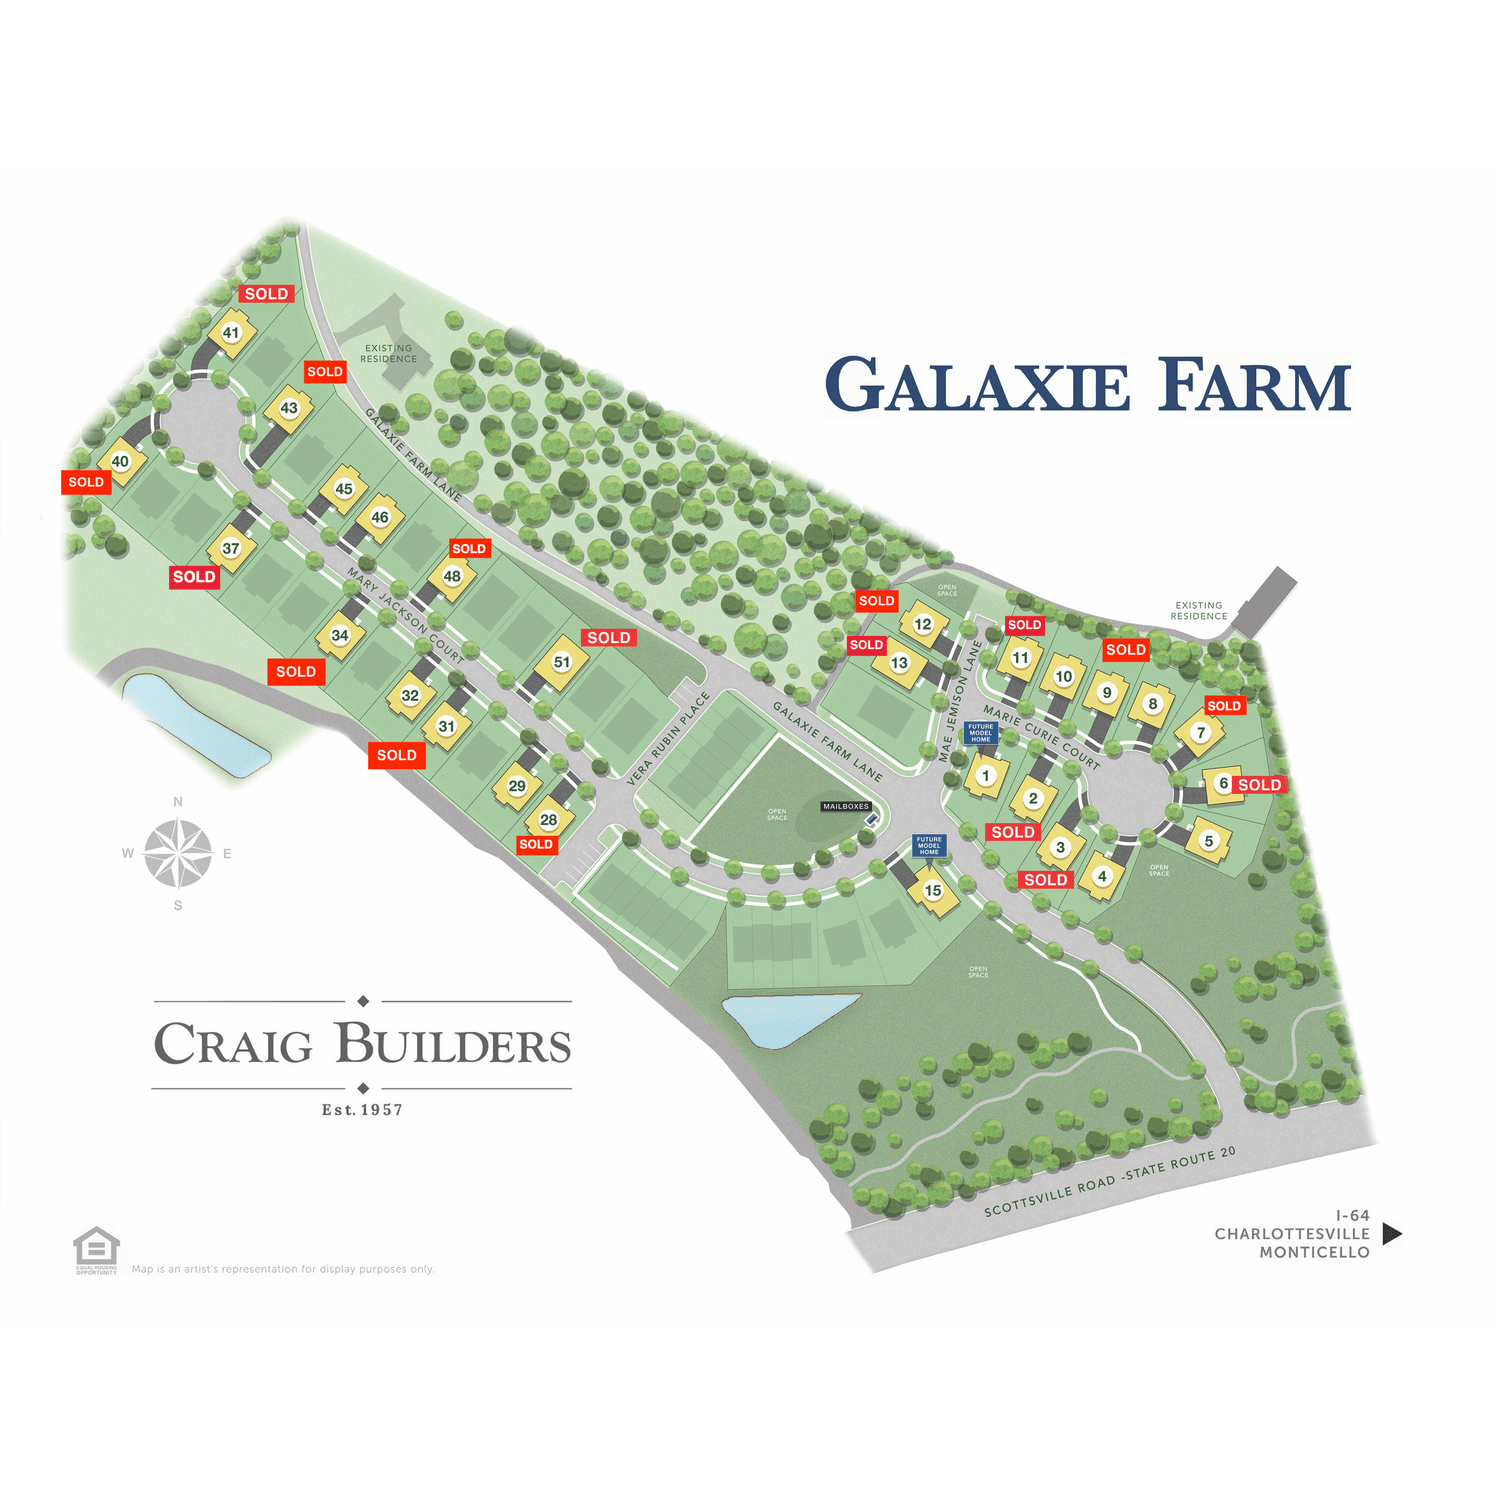 12. Galaxie Farm edificio a 4006 Marie Curie Court, Charlottesville, VA 22902